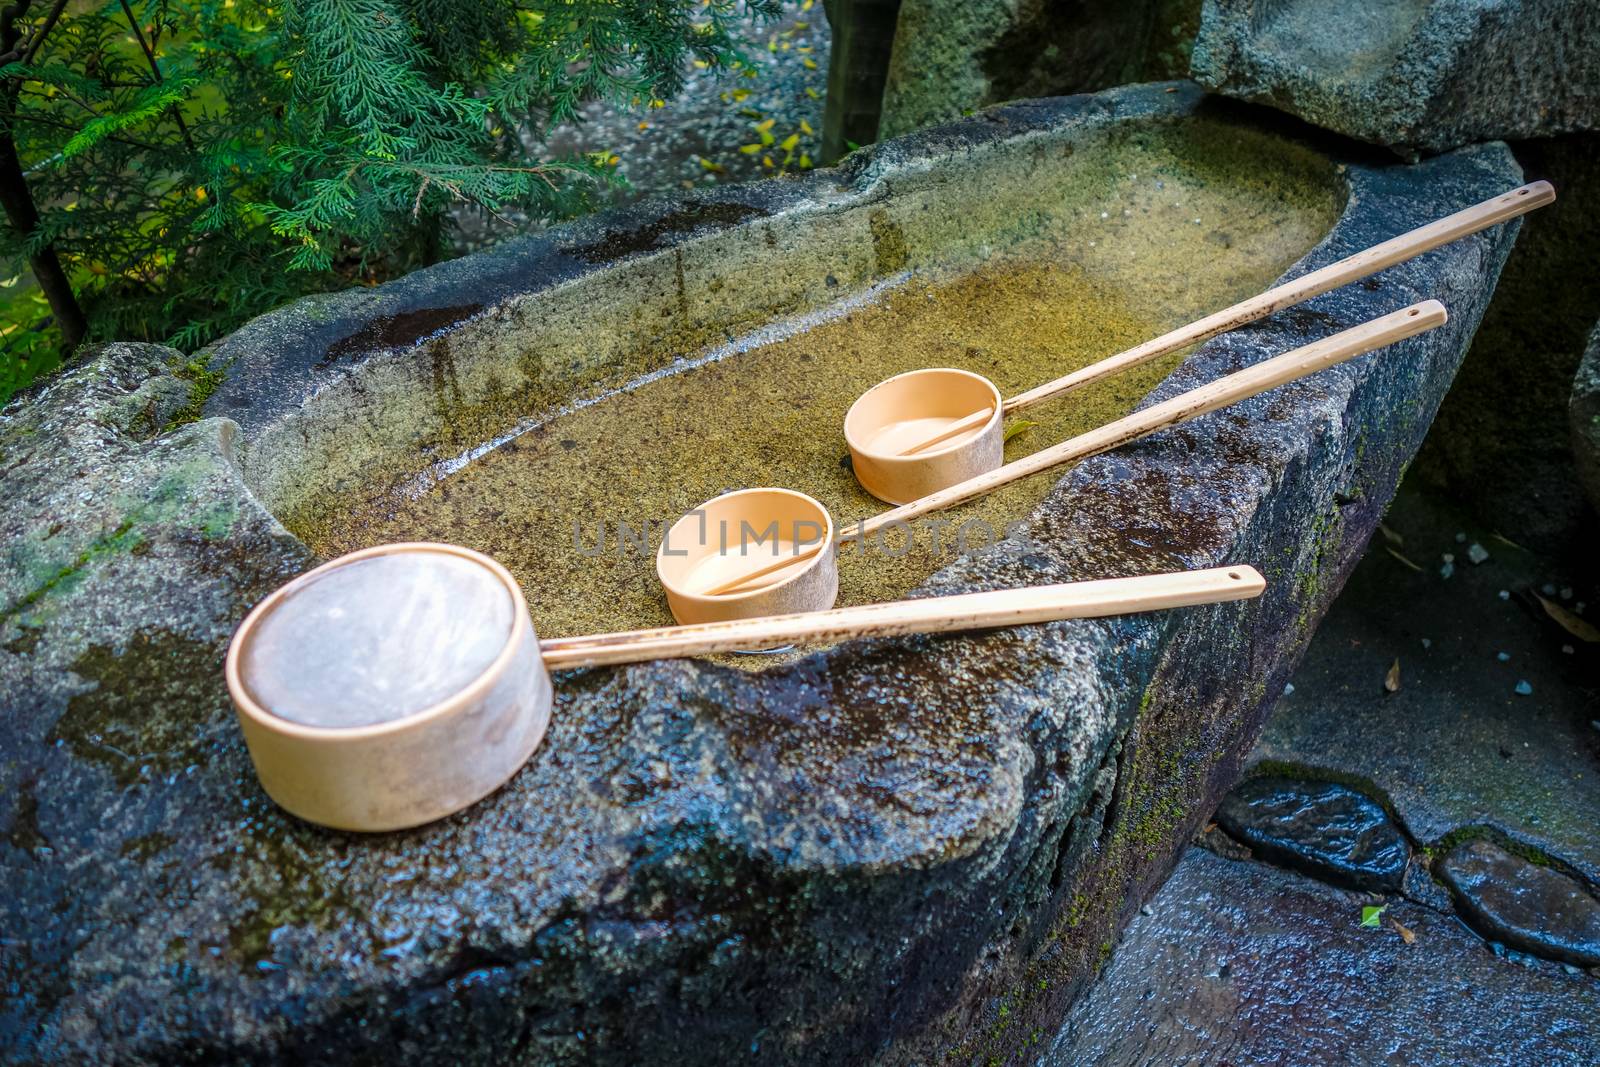 Purification fountain at a Shrine, Arashiyama, Kyoto, Japan by daboost